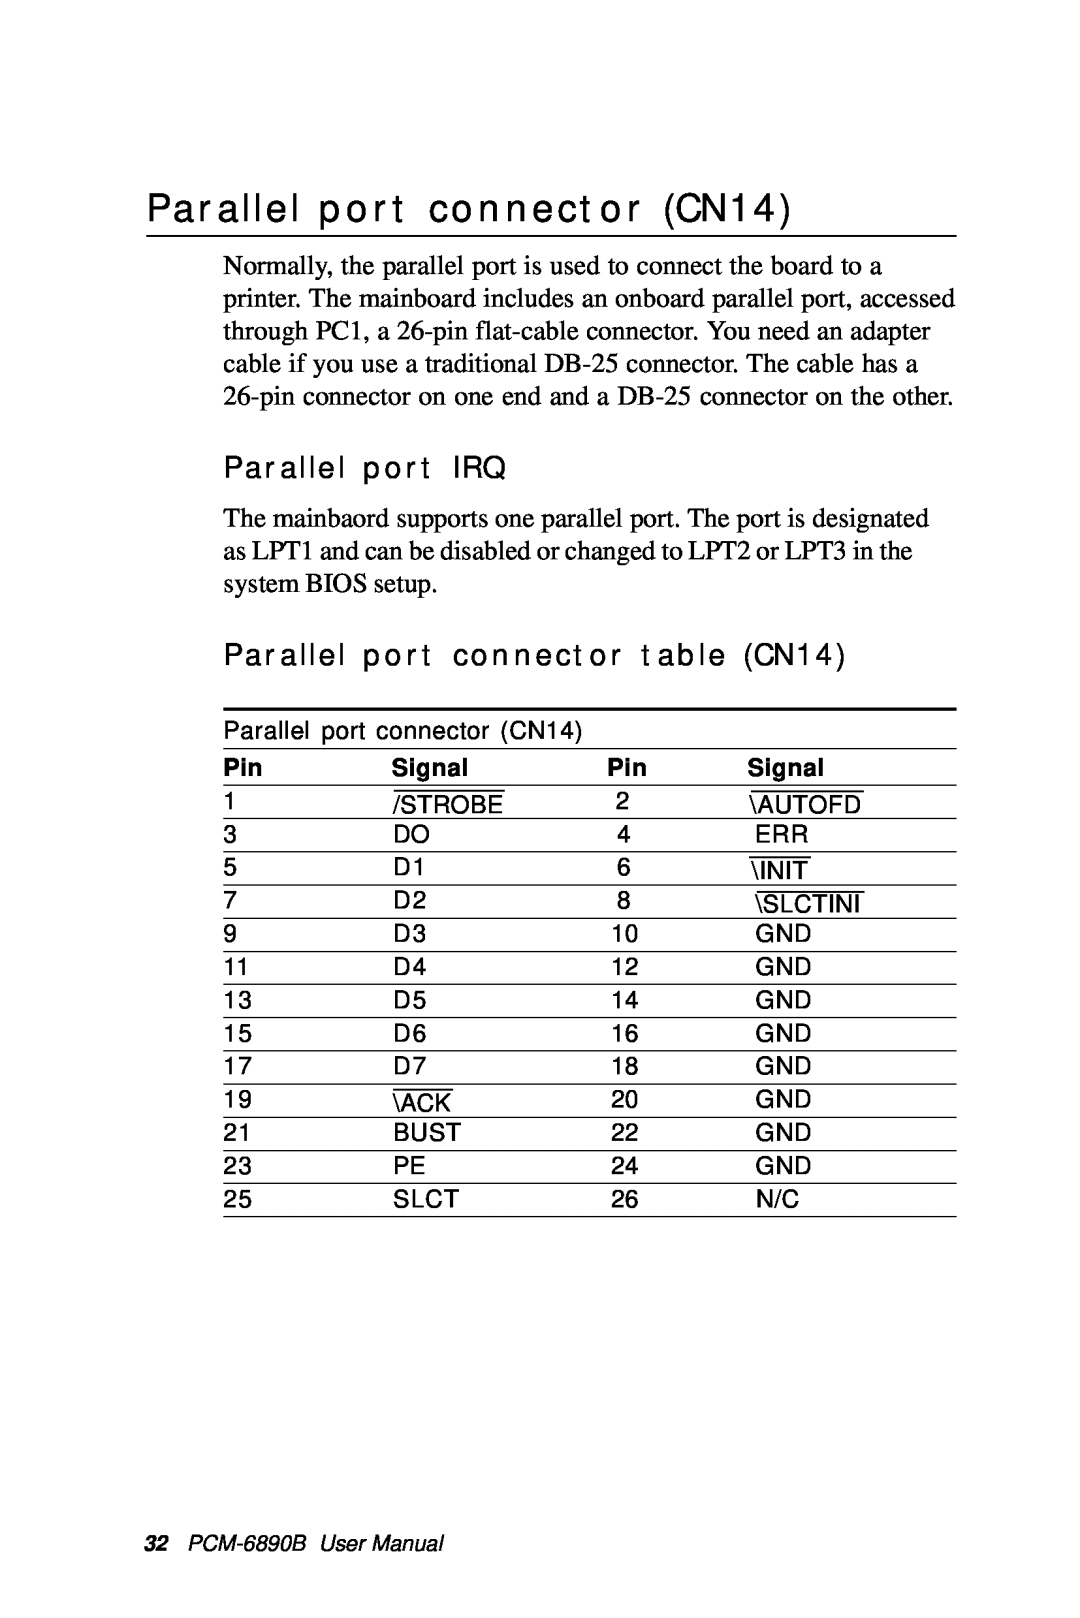 IBM PCM-6890B manual Parallel port connector CN14, Parallel port IRQ, Parallel port connector table CN14 